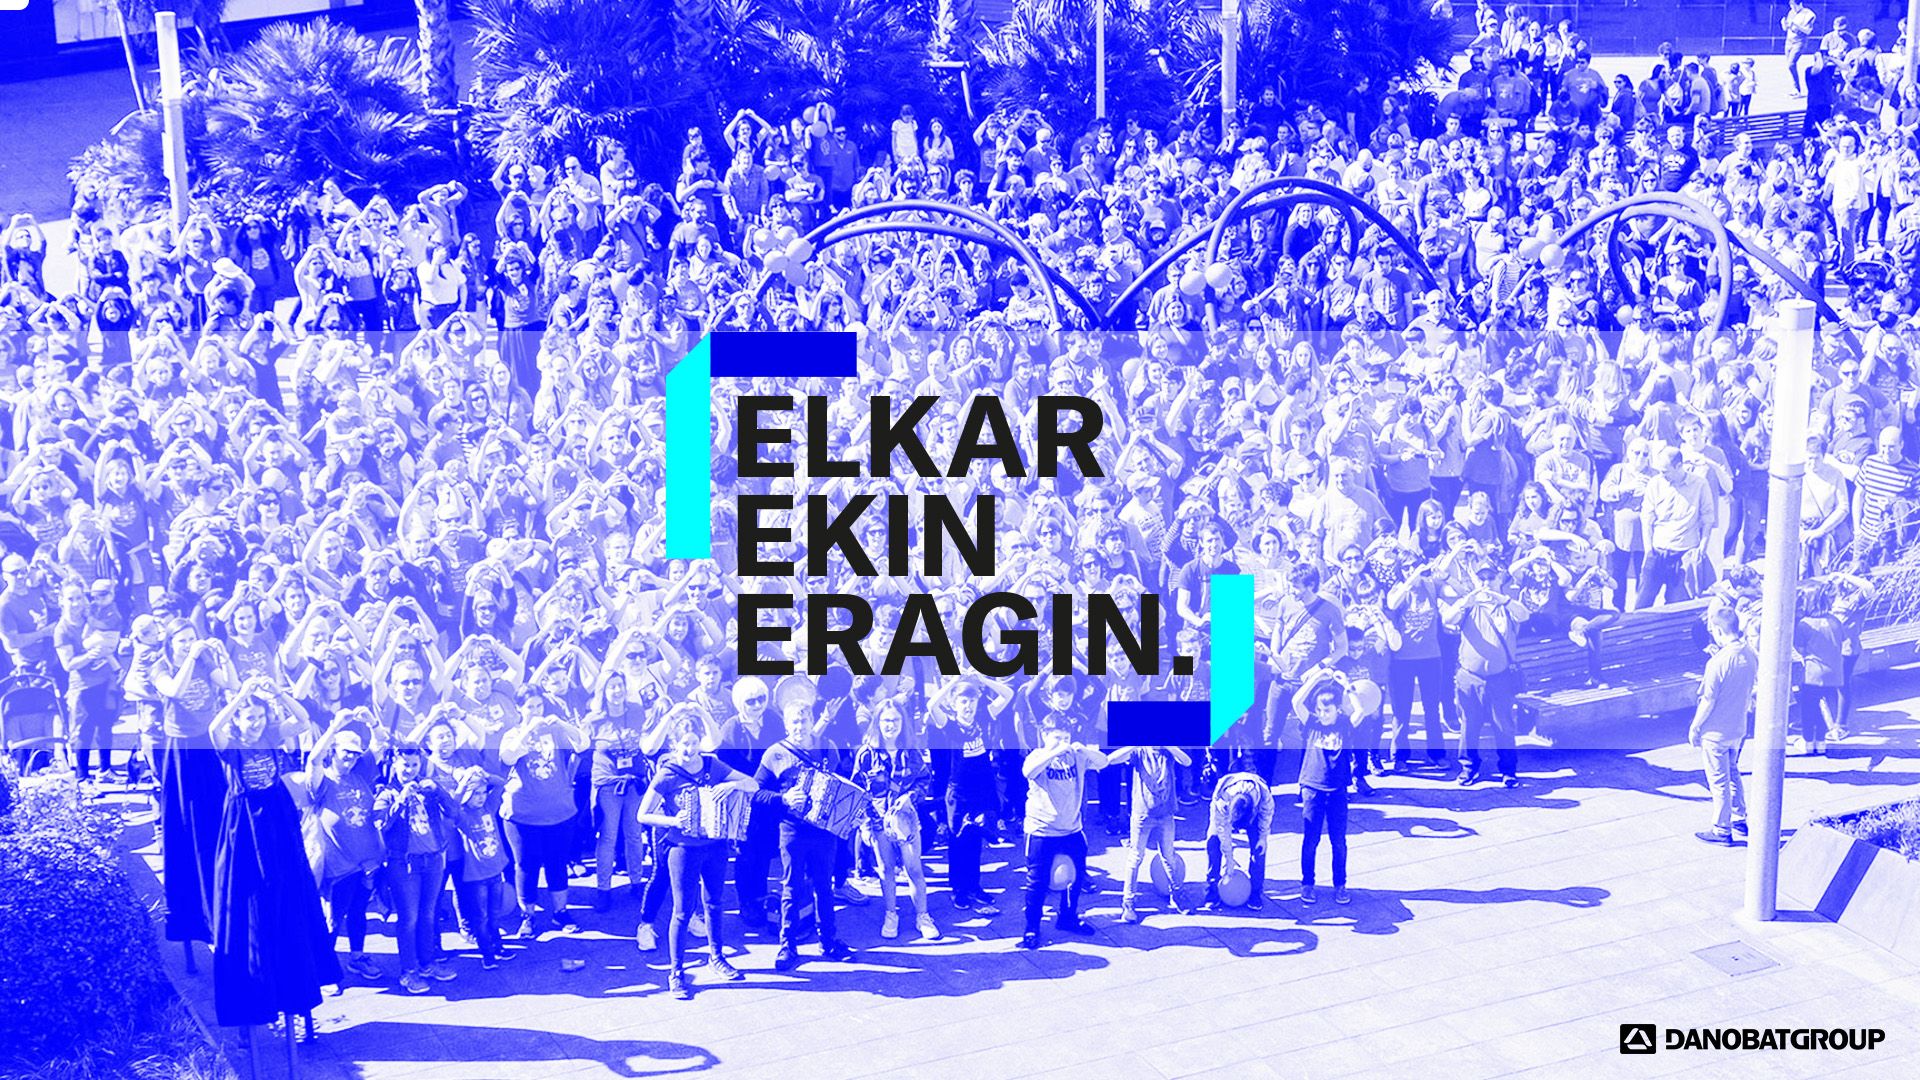 Danobatgroup destinará 600.000 euros a su programa de cooperación social “Elkarrekin Eragin”